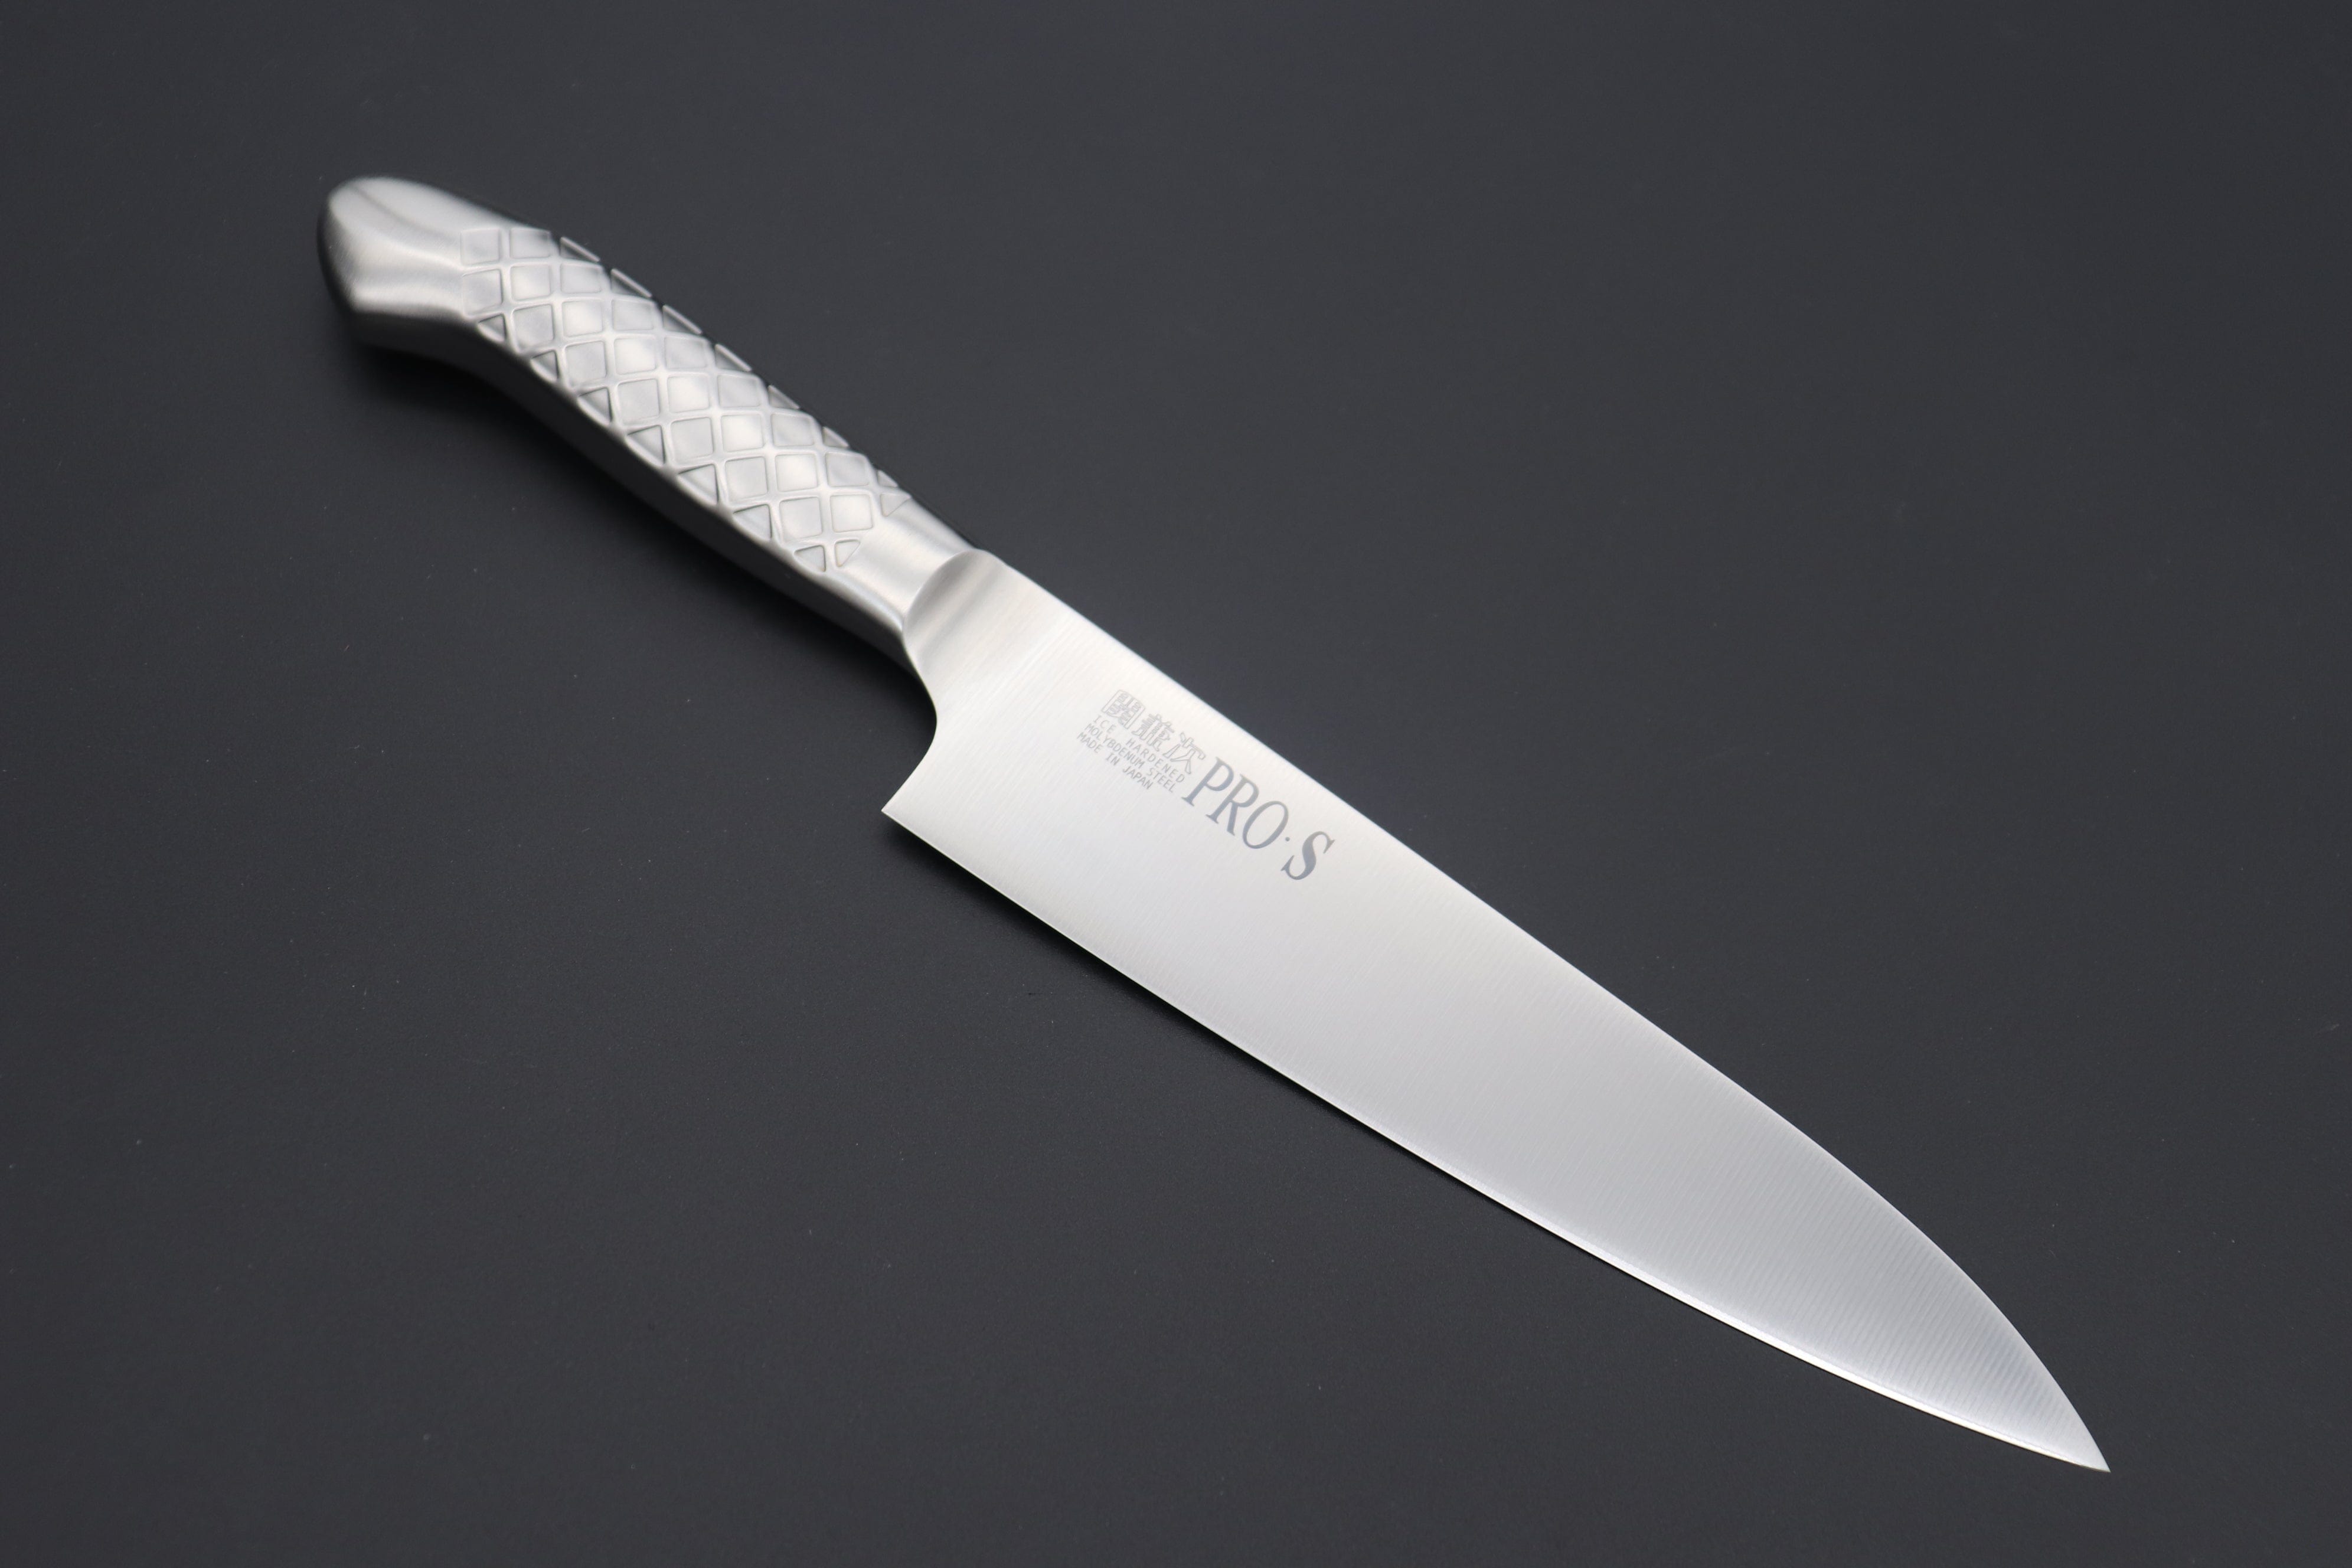 Can I sharpen @mini.katana to be sharper than a surgical knife